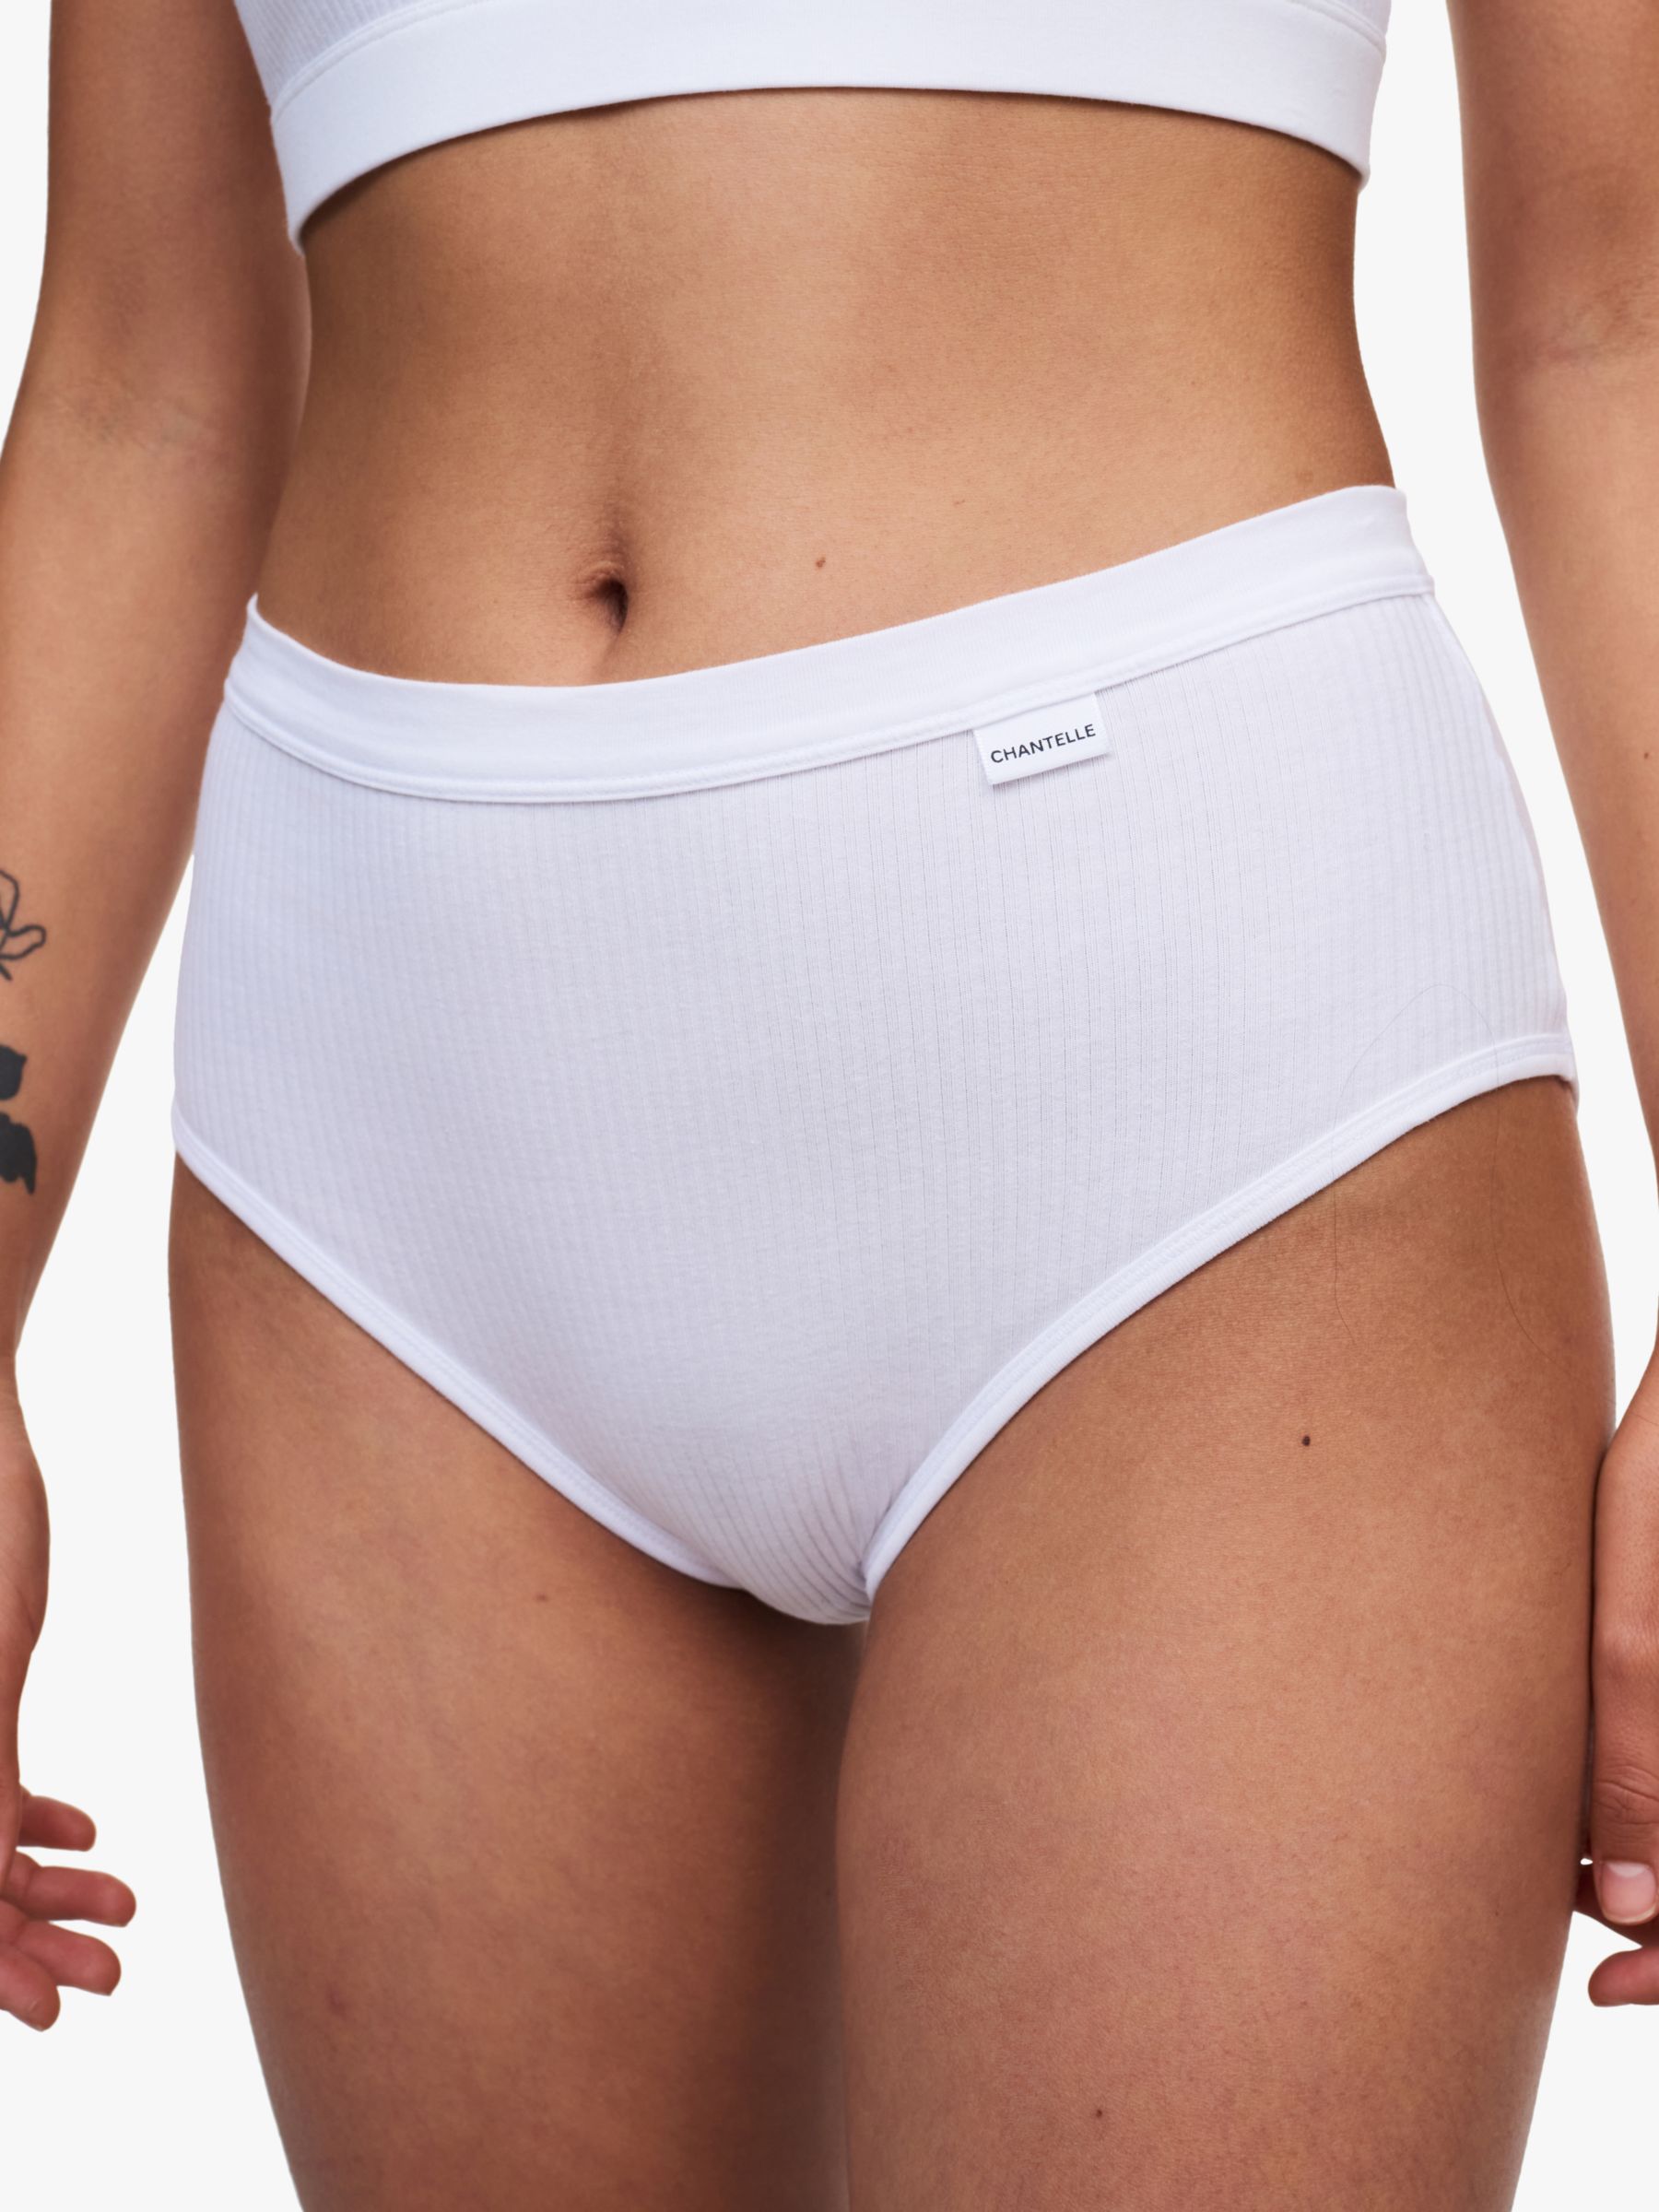 New Jockey Women's size 7 Underwear Elance Cotton Briefs Cut 3 Pack Coral  Tropic